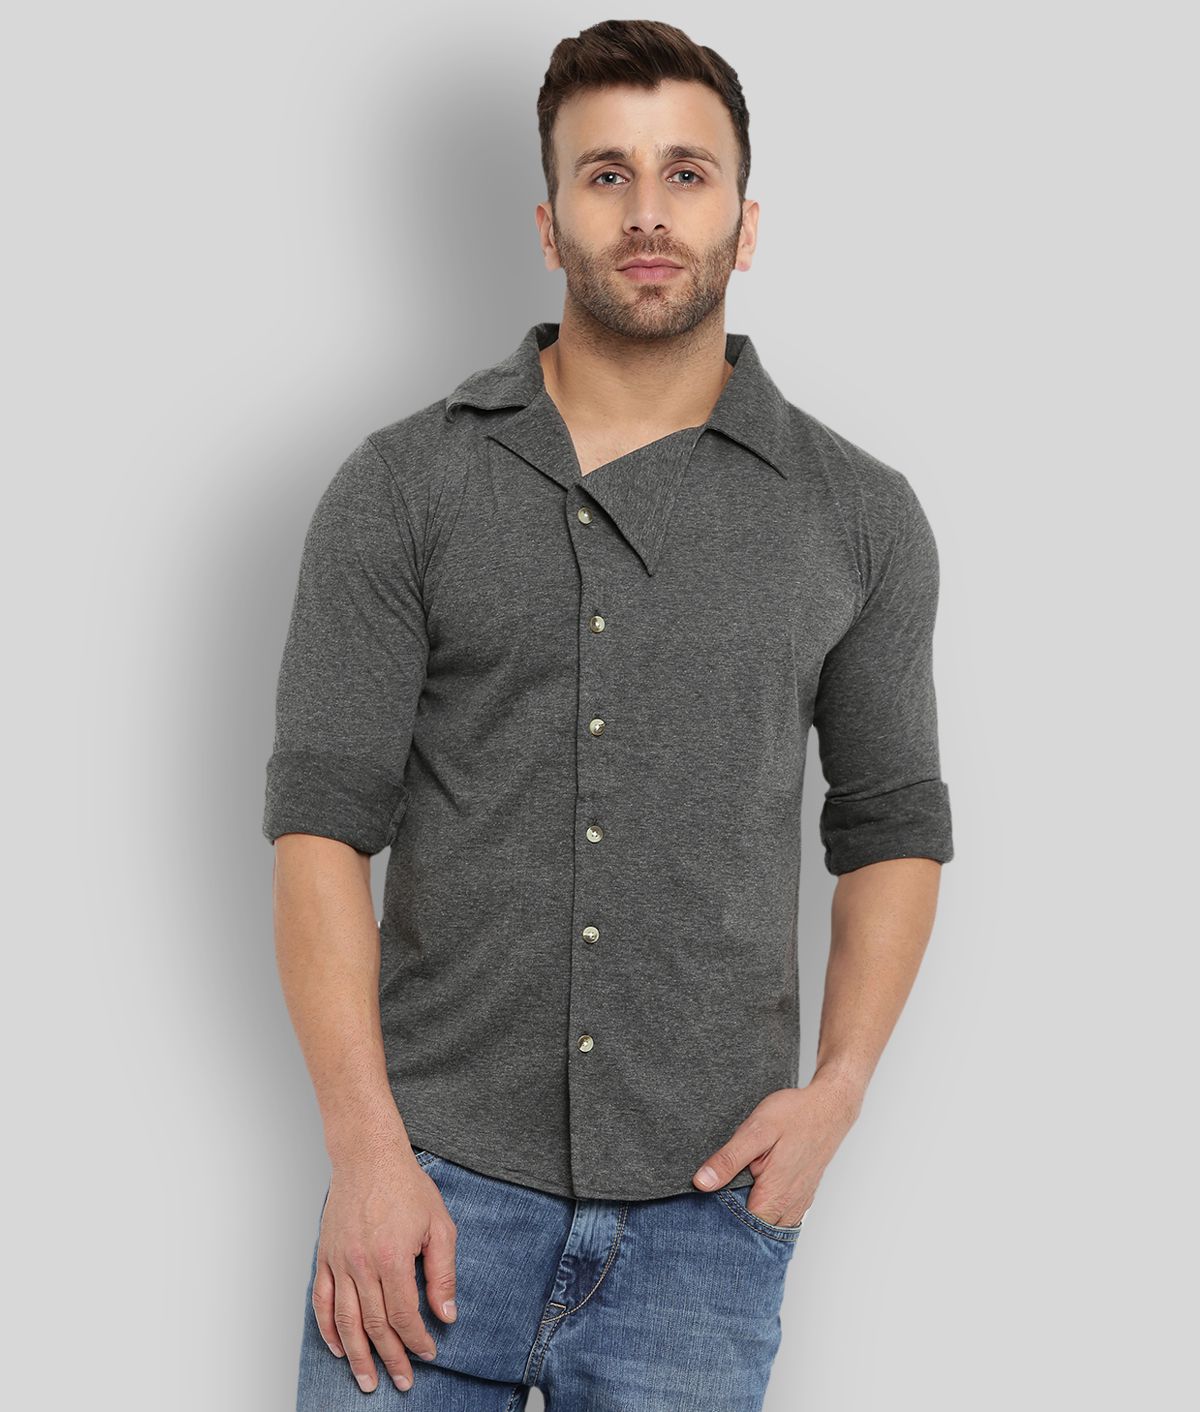 Gritstones - Grey Cotton Regular Fit Men's Casual Shirt ( Pack of 1 )